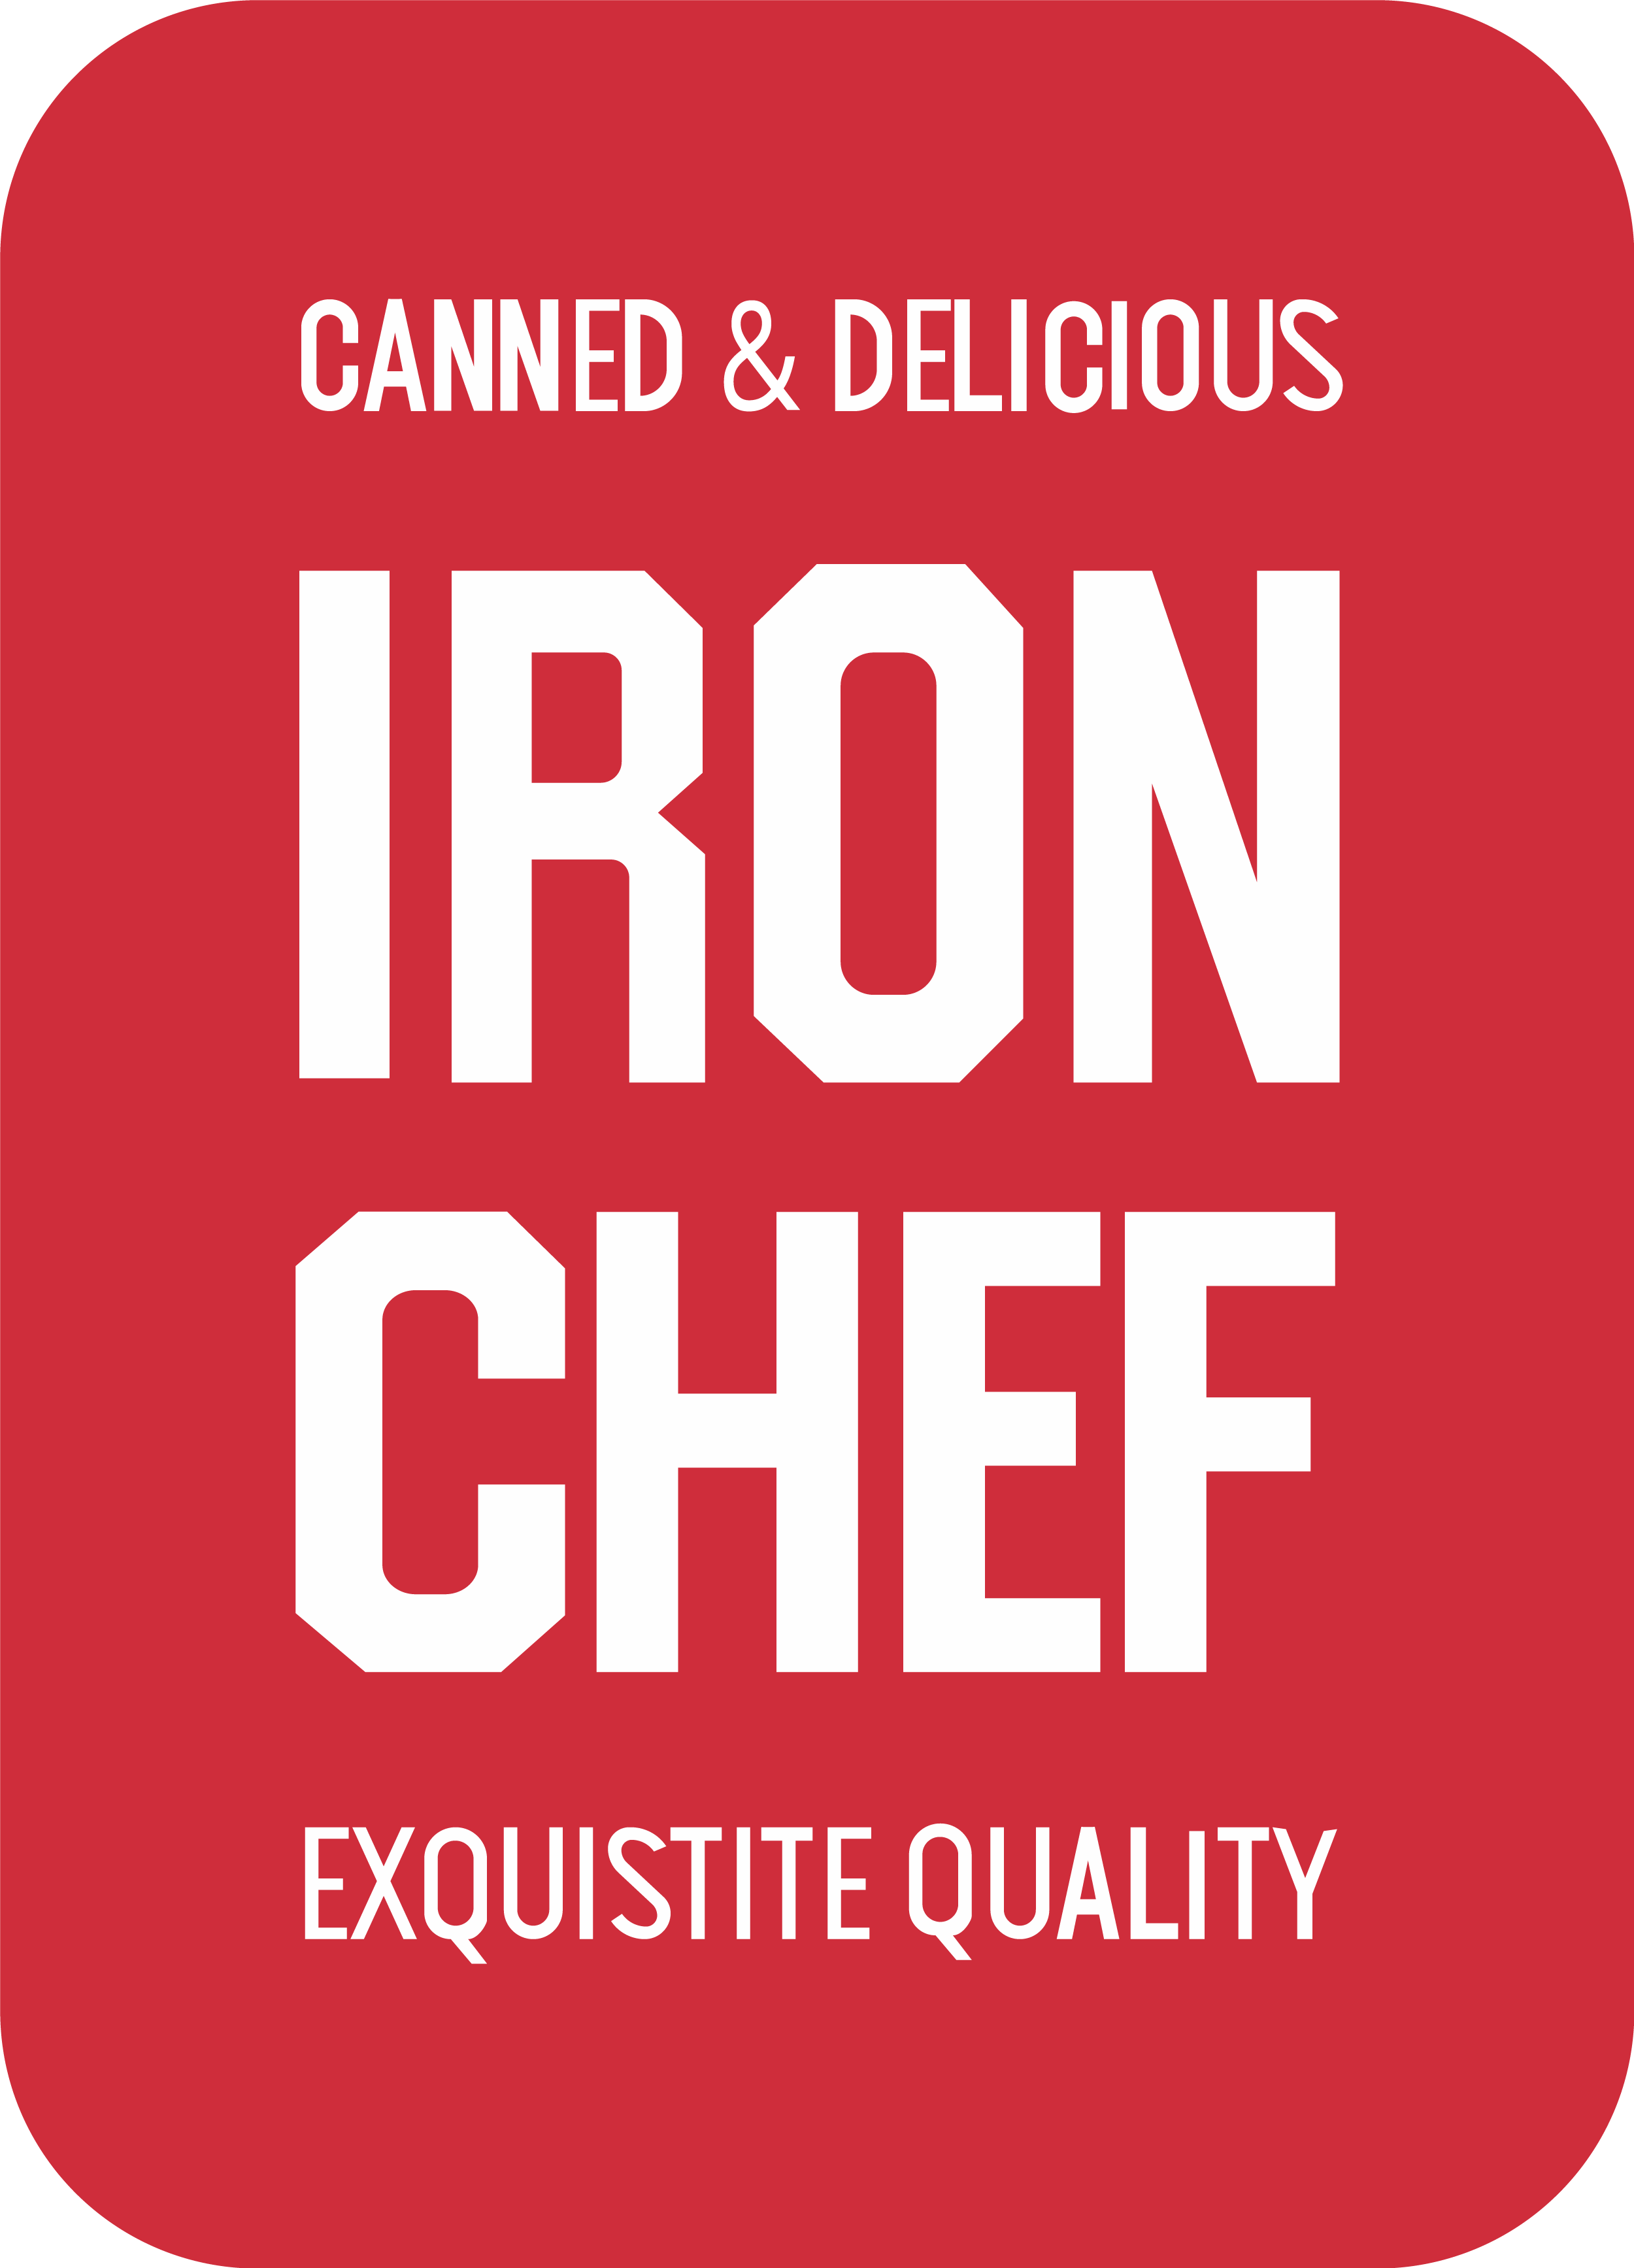 Iron Chef